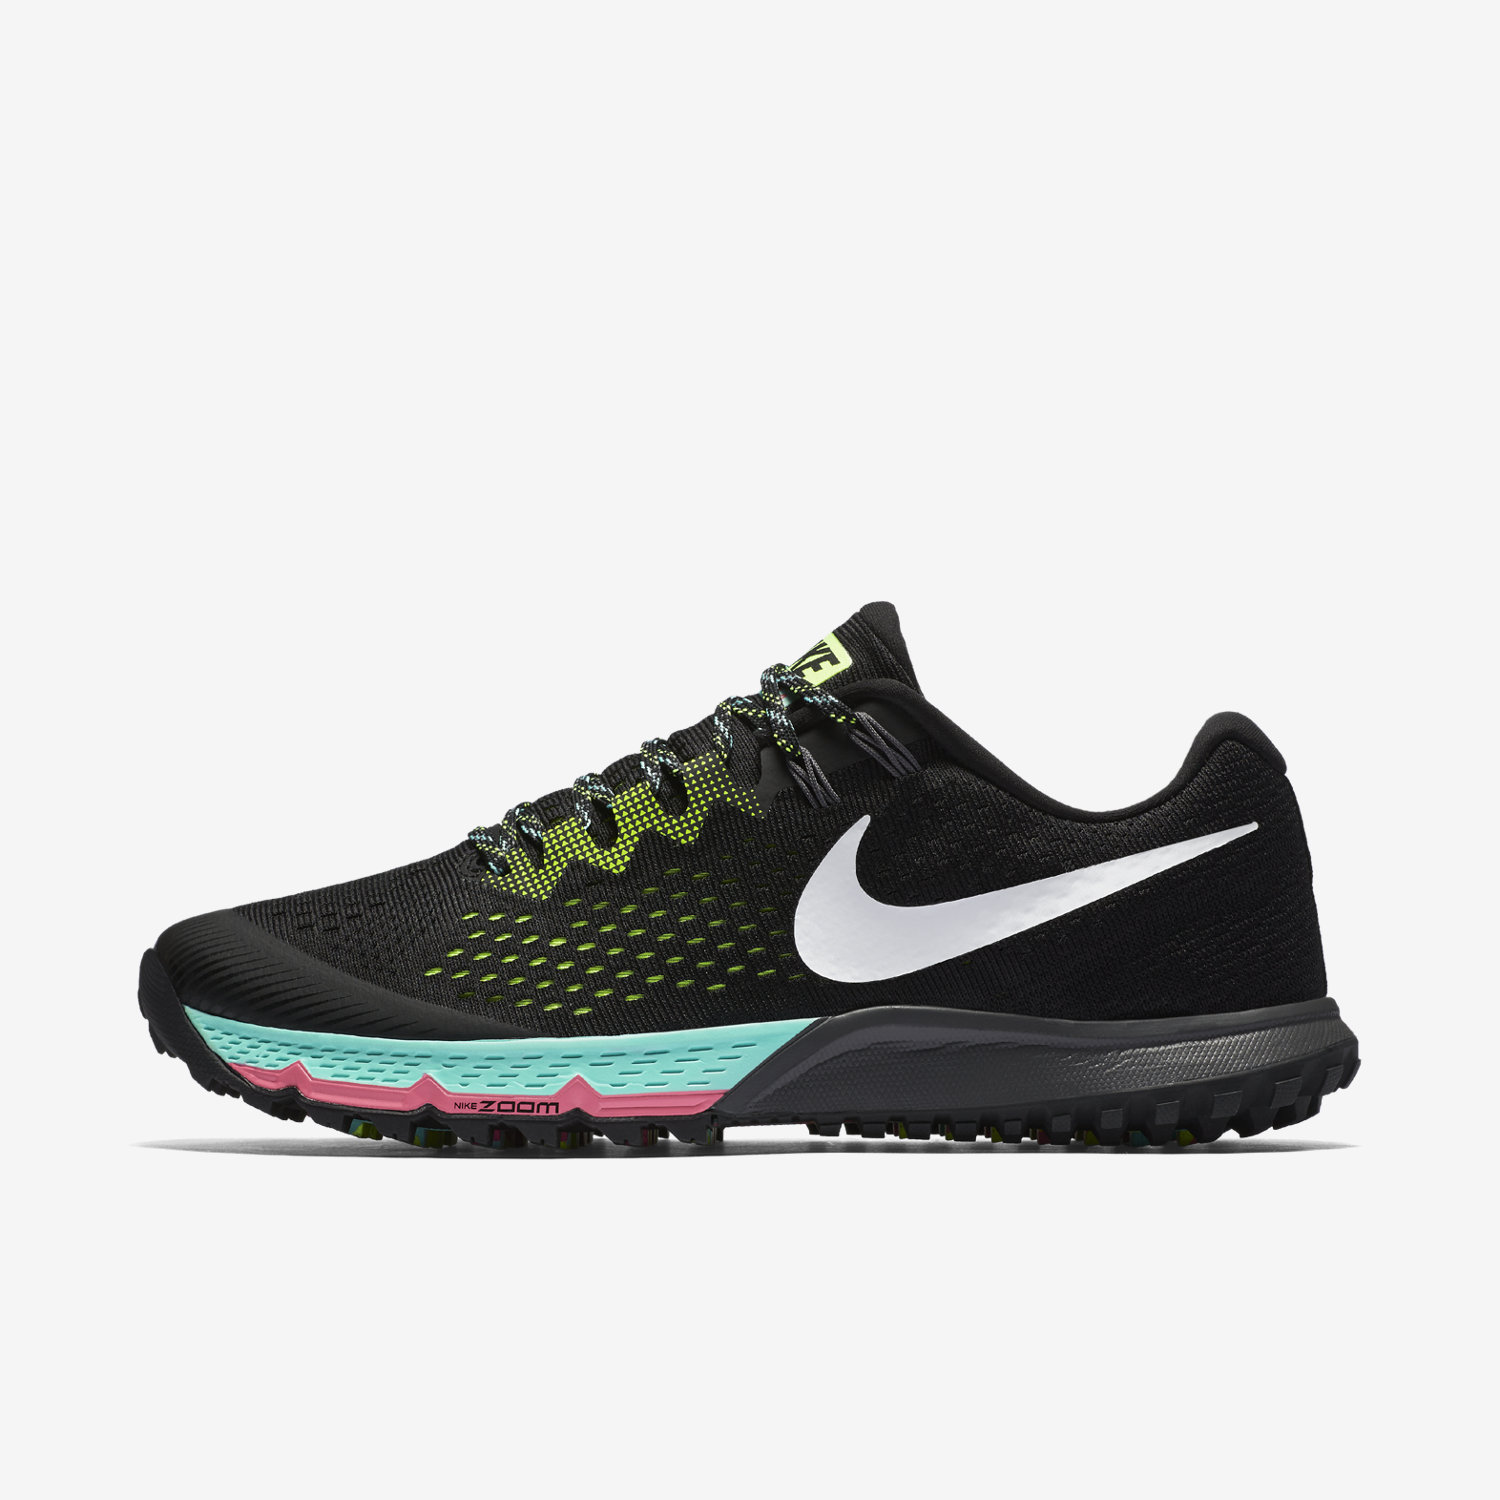 Nike sports shoes nike running shoes mens sale dubai IVRENEA